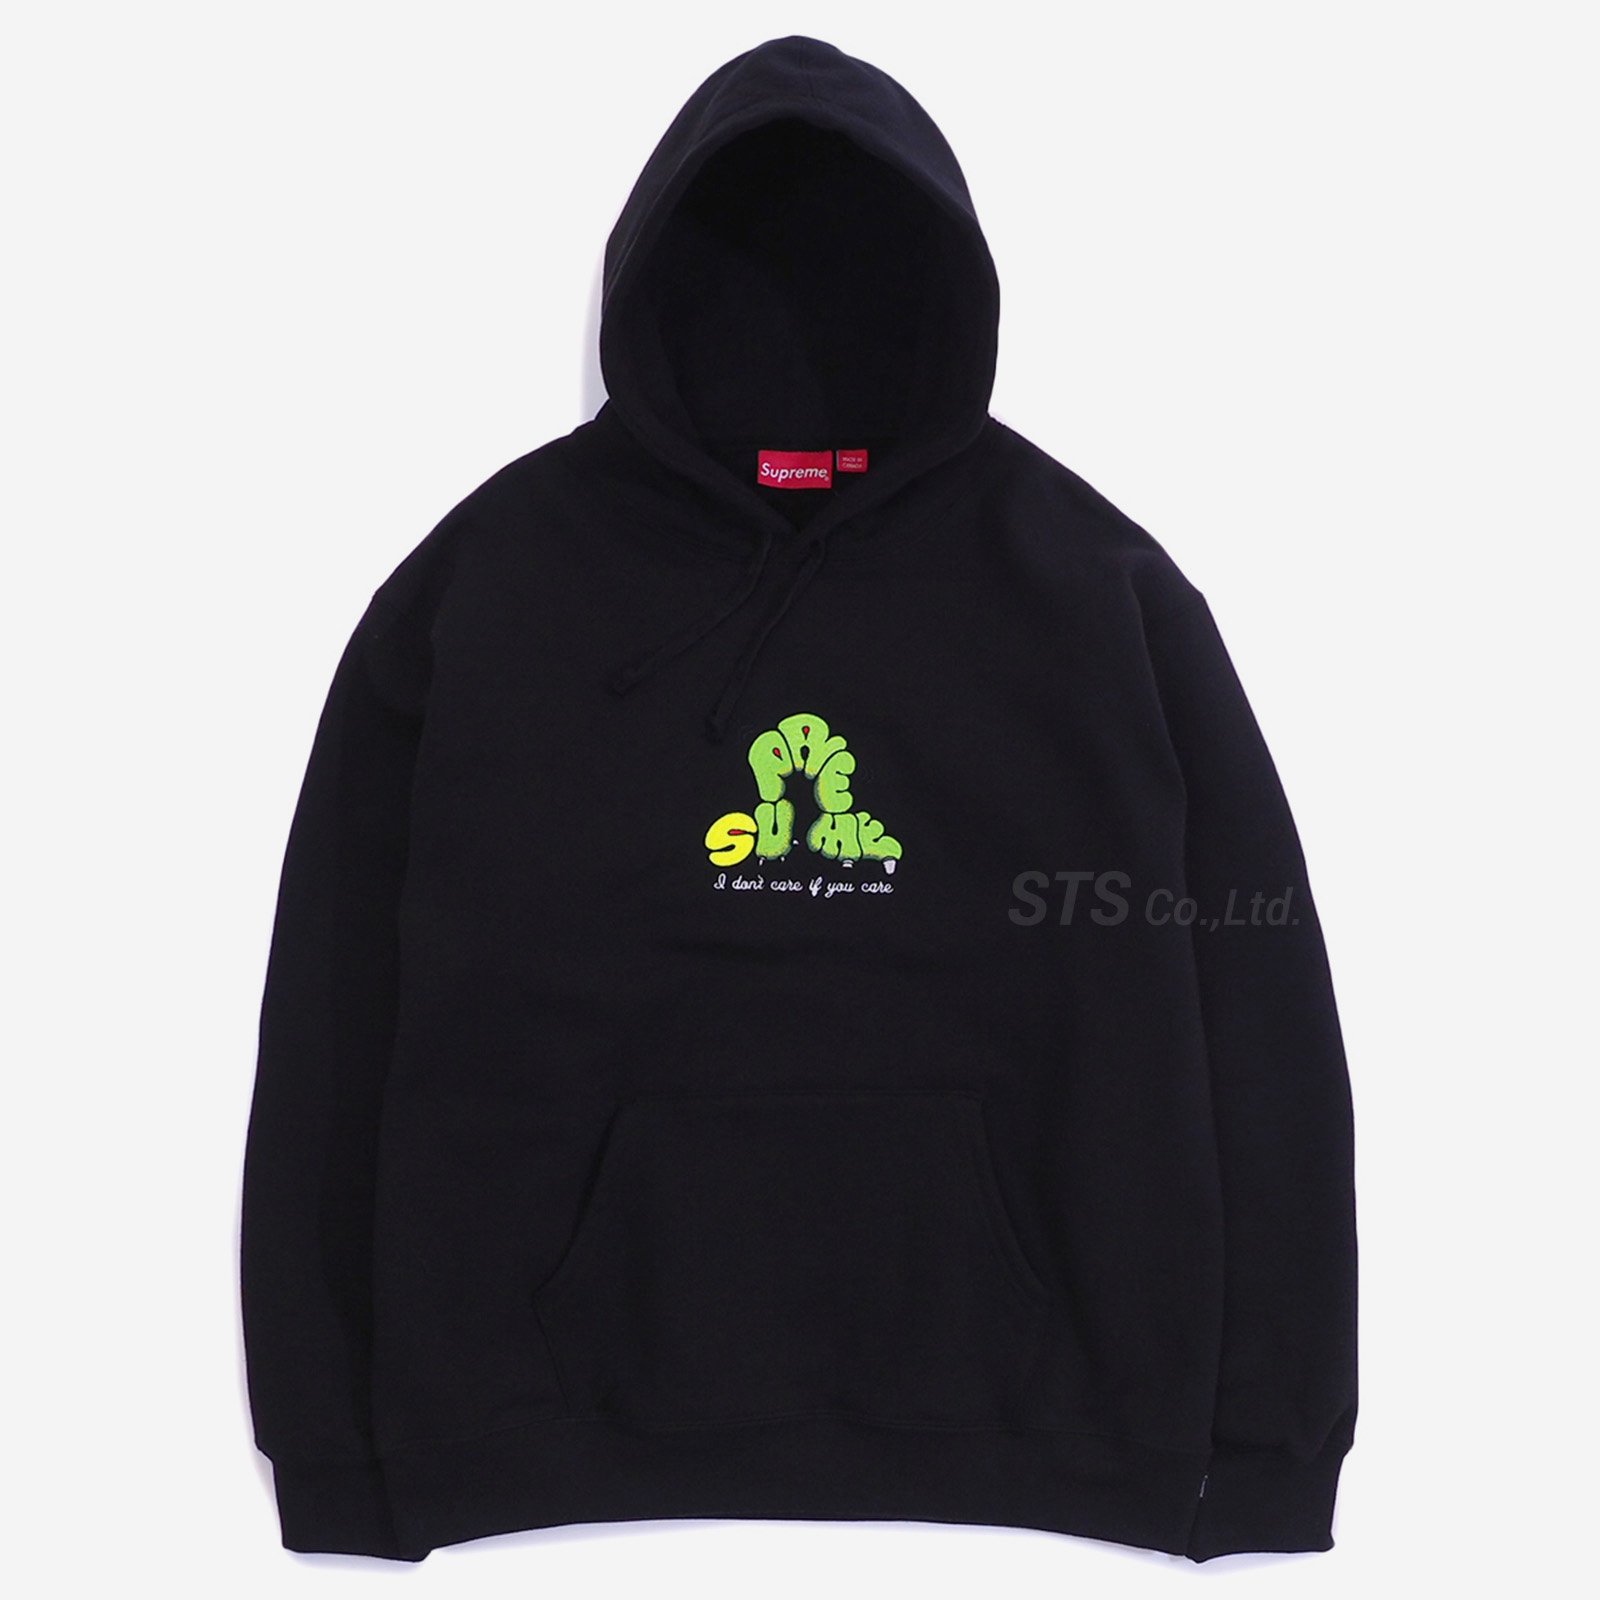 Supreme Don't Care Hooded Sweatshirt19000円で購入希望です